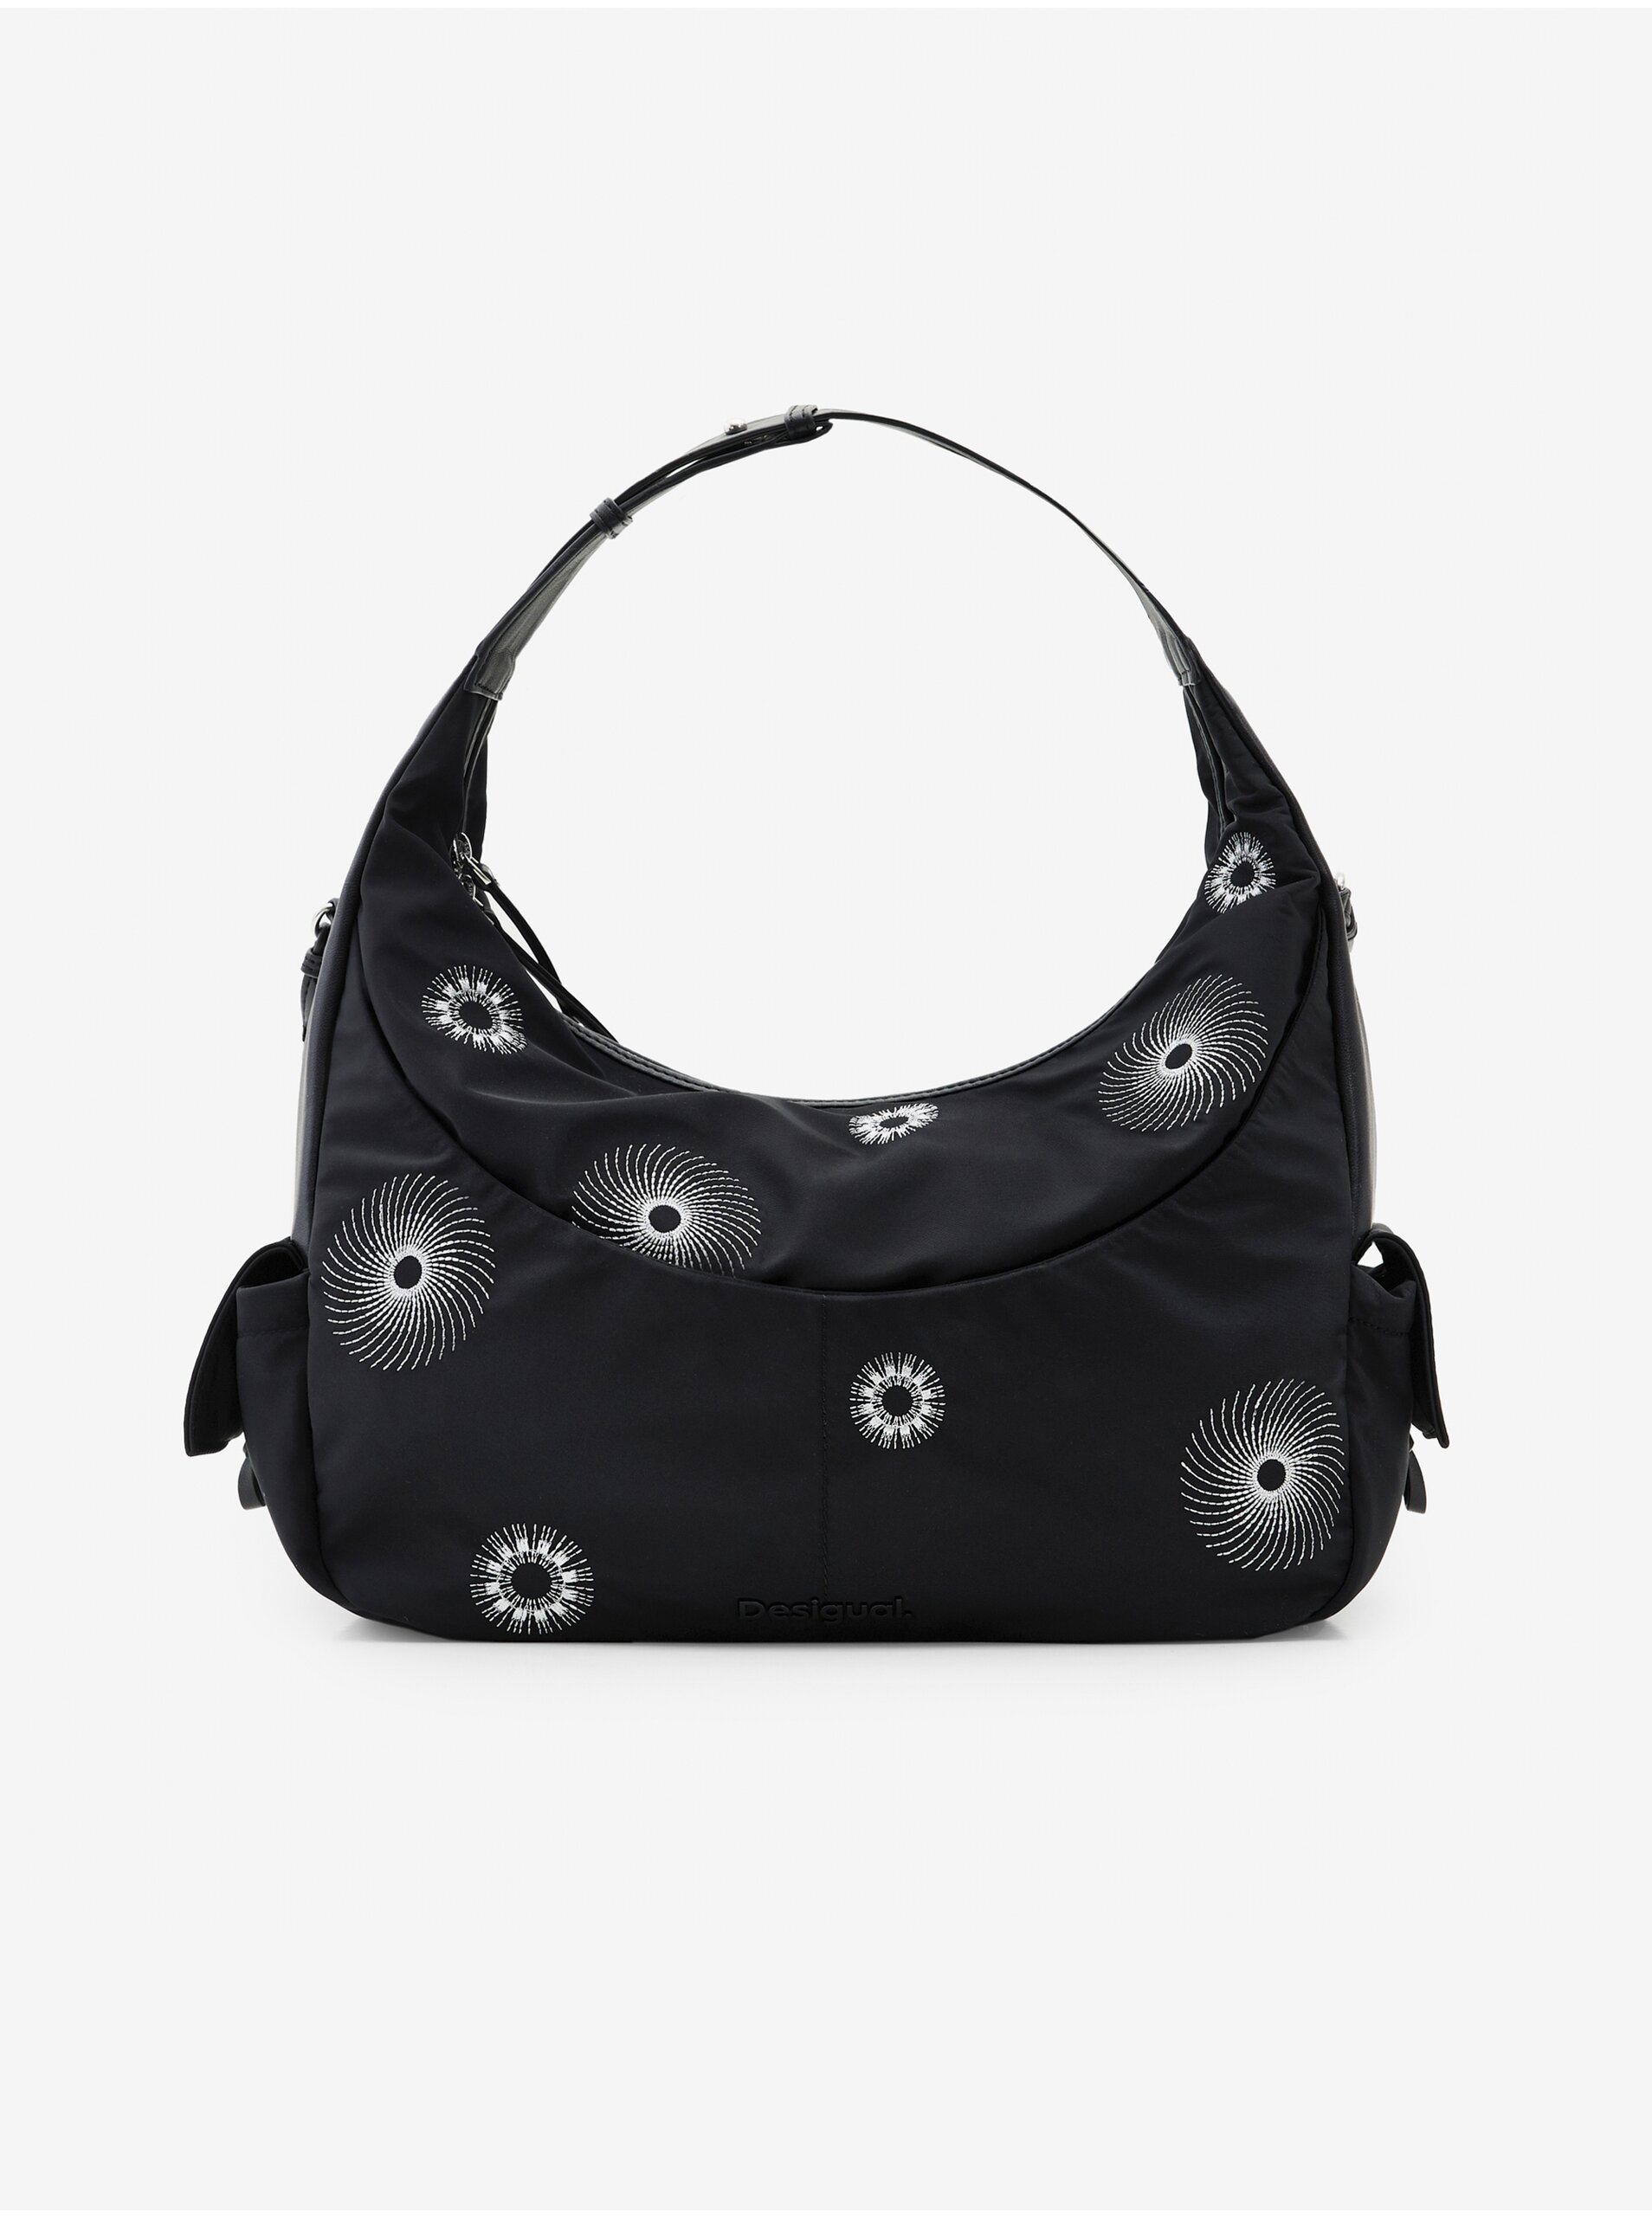 Black women's patterned handbag Desigual Jimenas Birmalph - Women